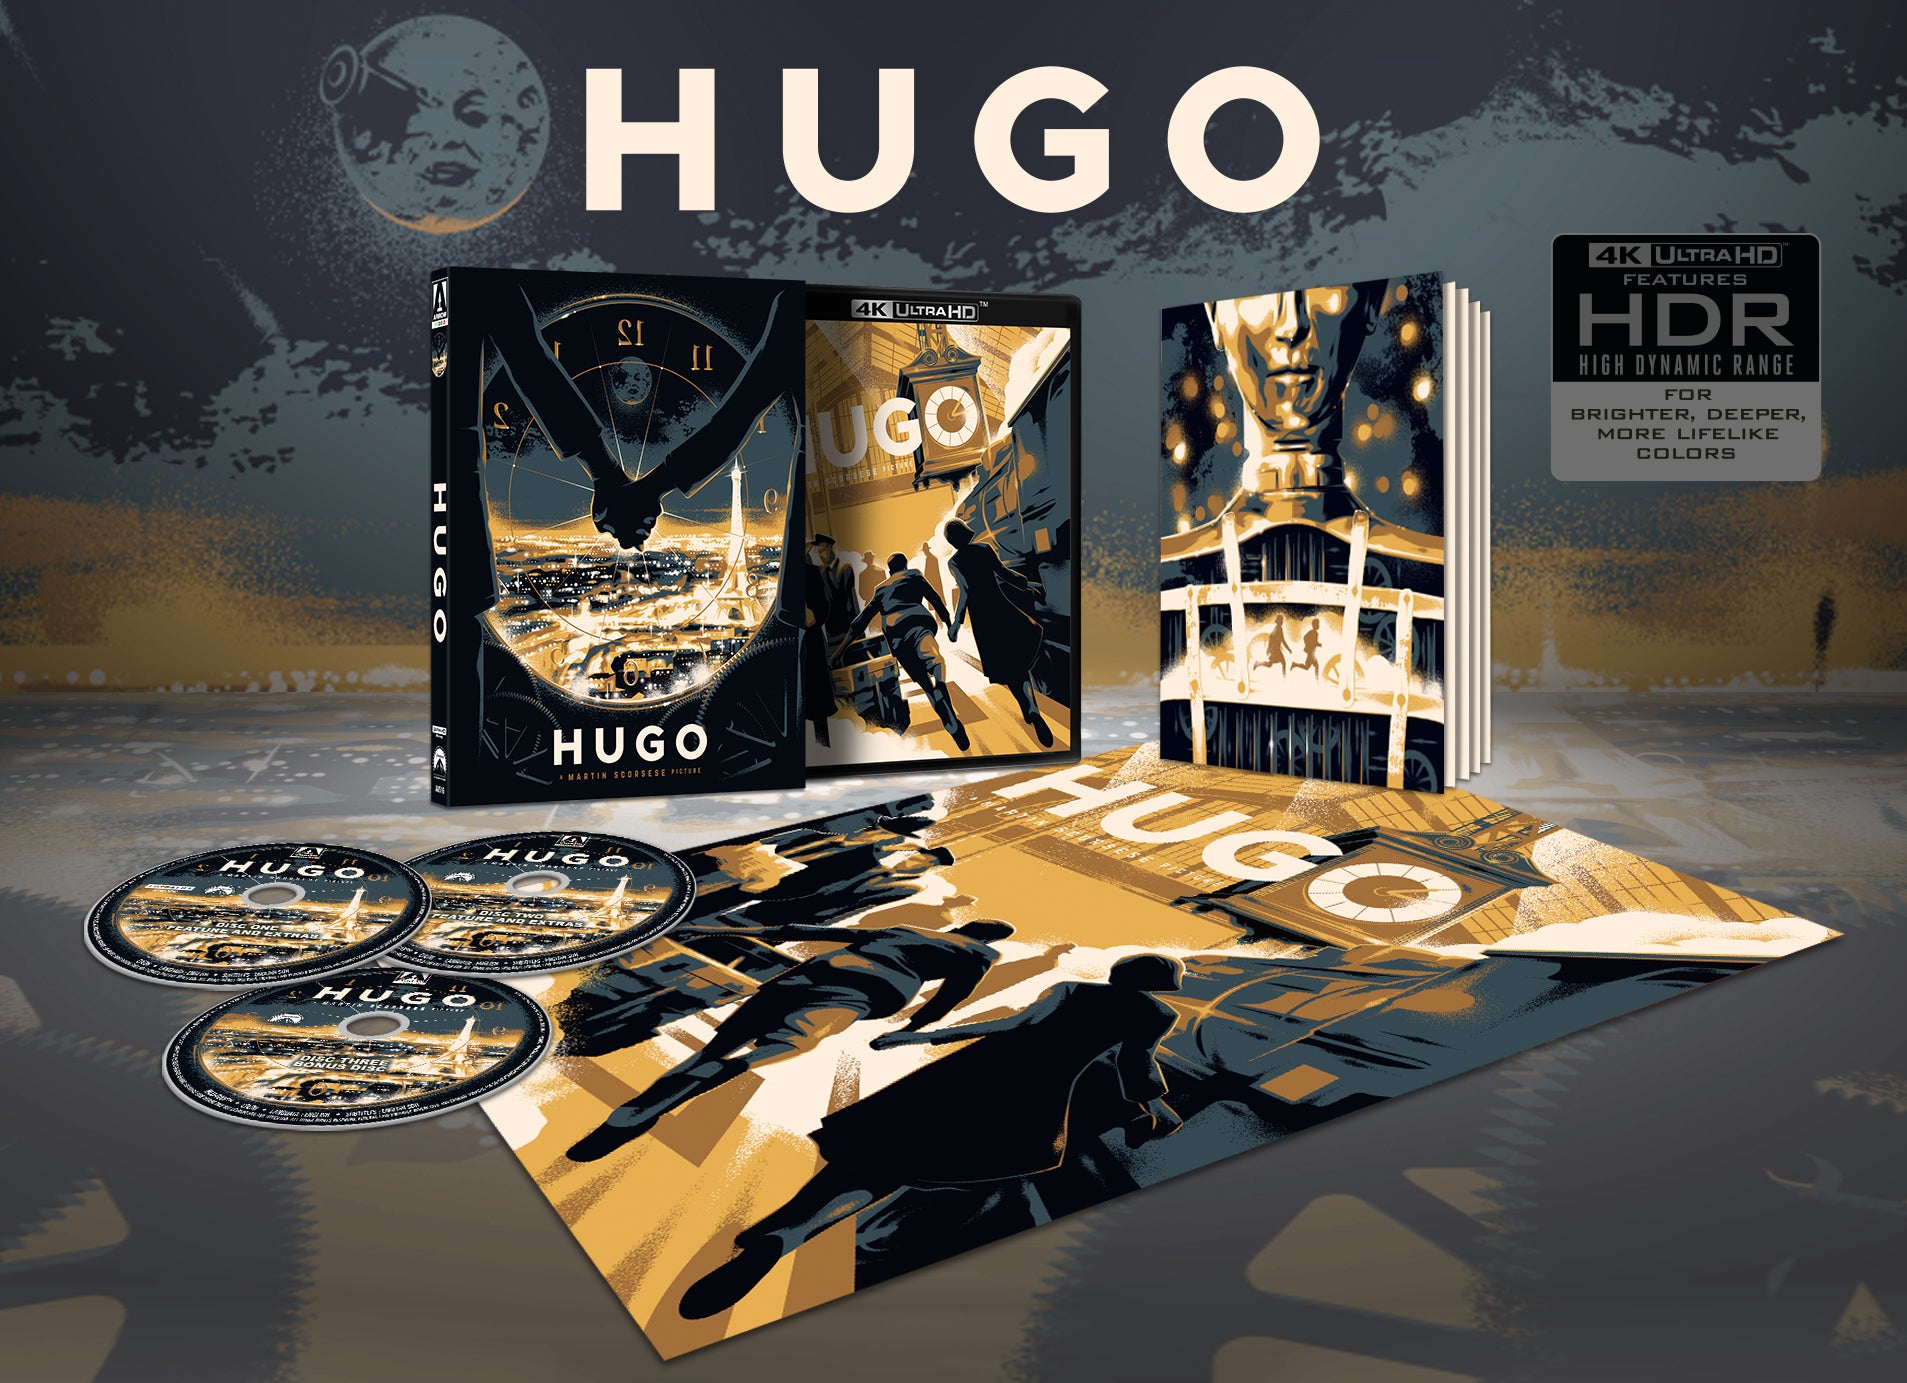 HUGO (LIMITED EDITION) 4K UHD/BLU-RAY